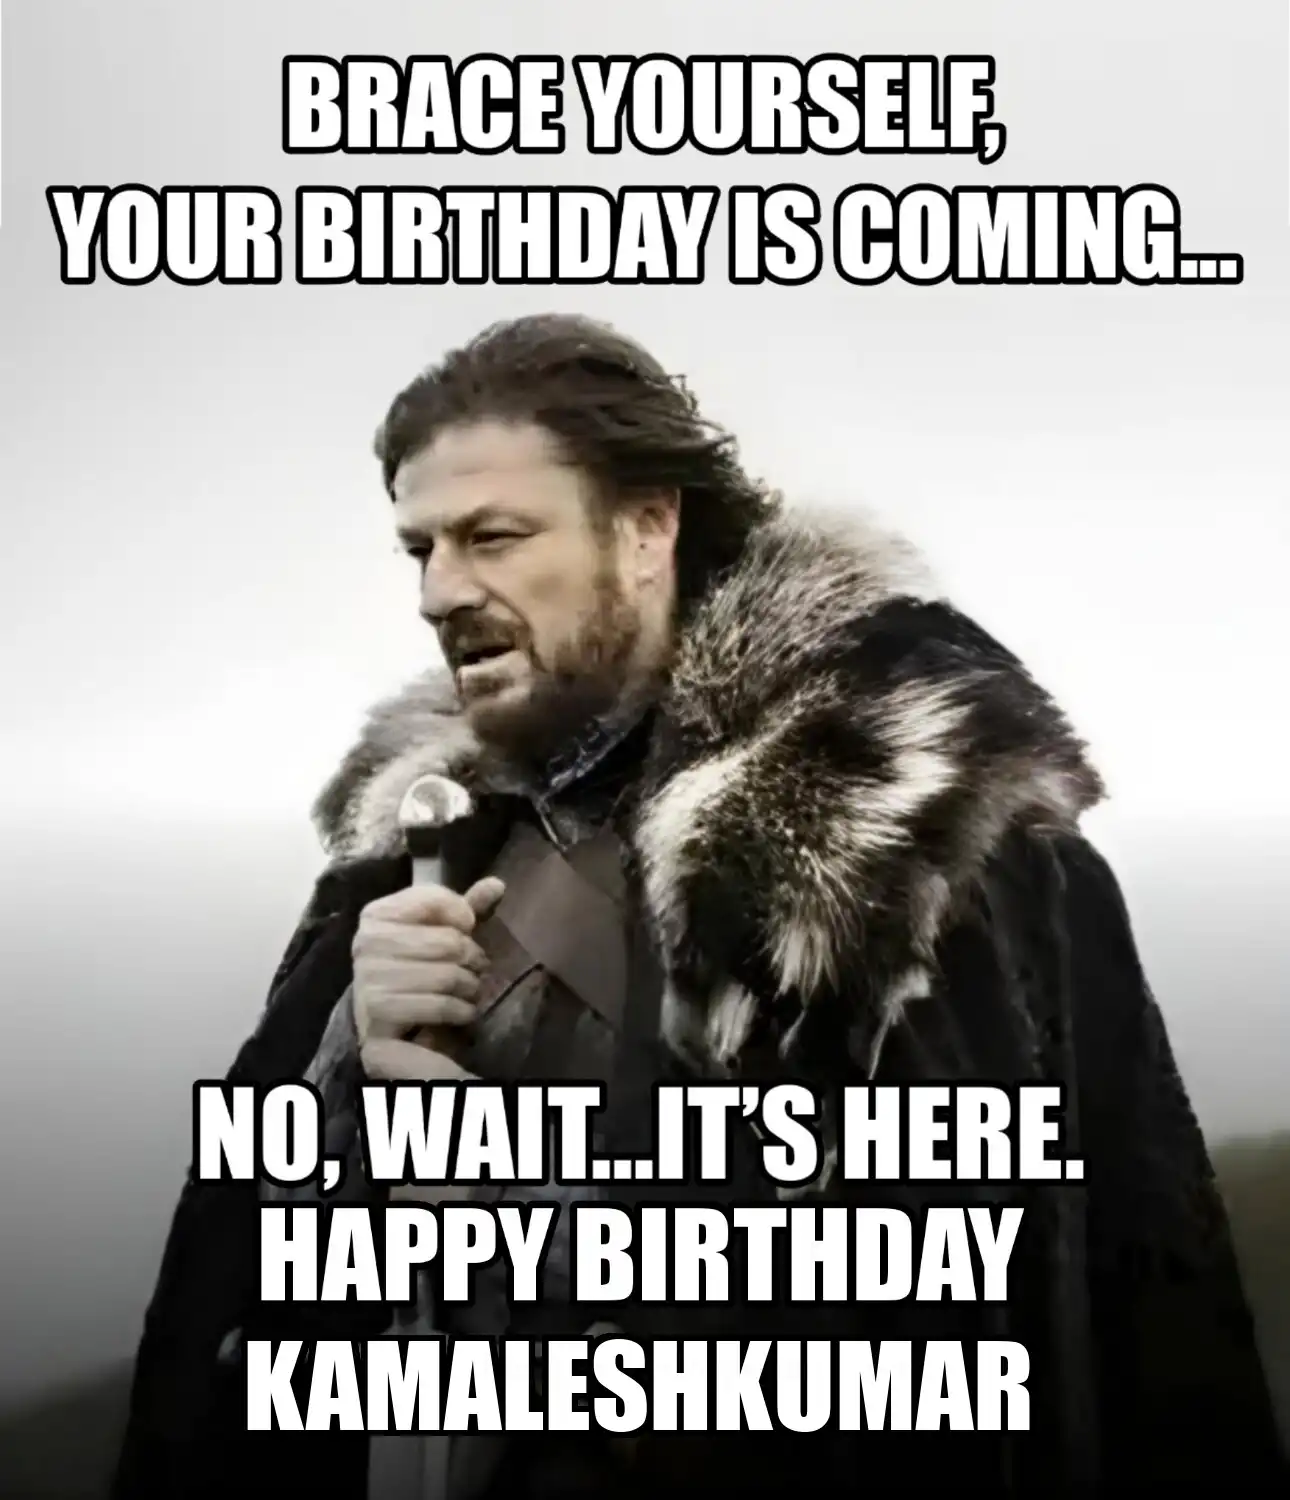 Happy Birthday Kamaleshkumar Brace Yourself Your Birthday Is Coming Meme